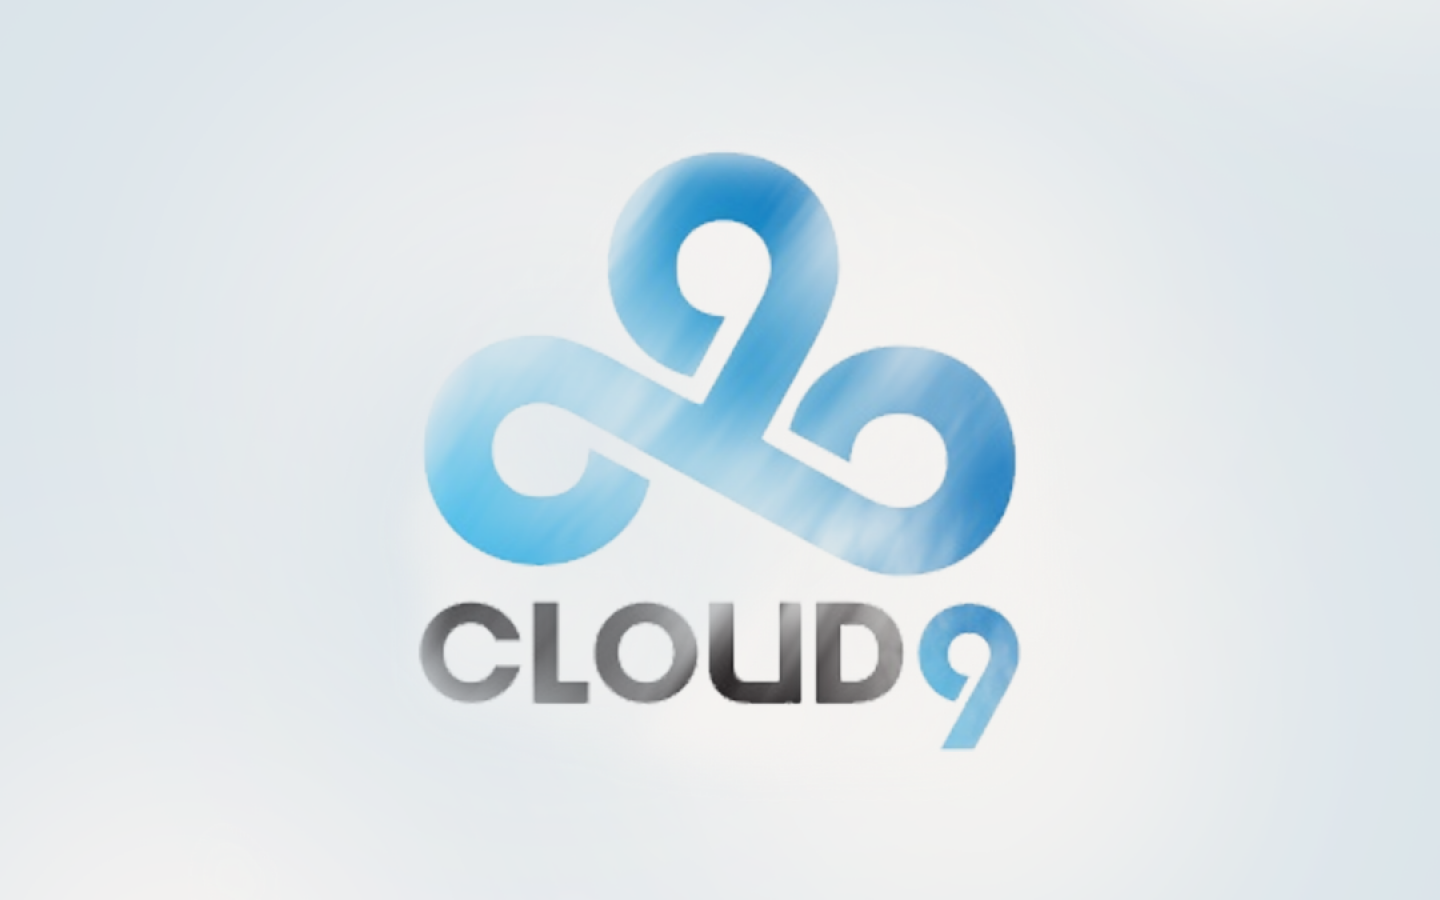 Cloud9 Picture Image Wallpaper